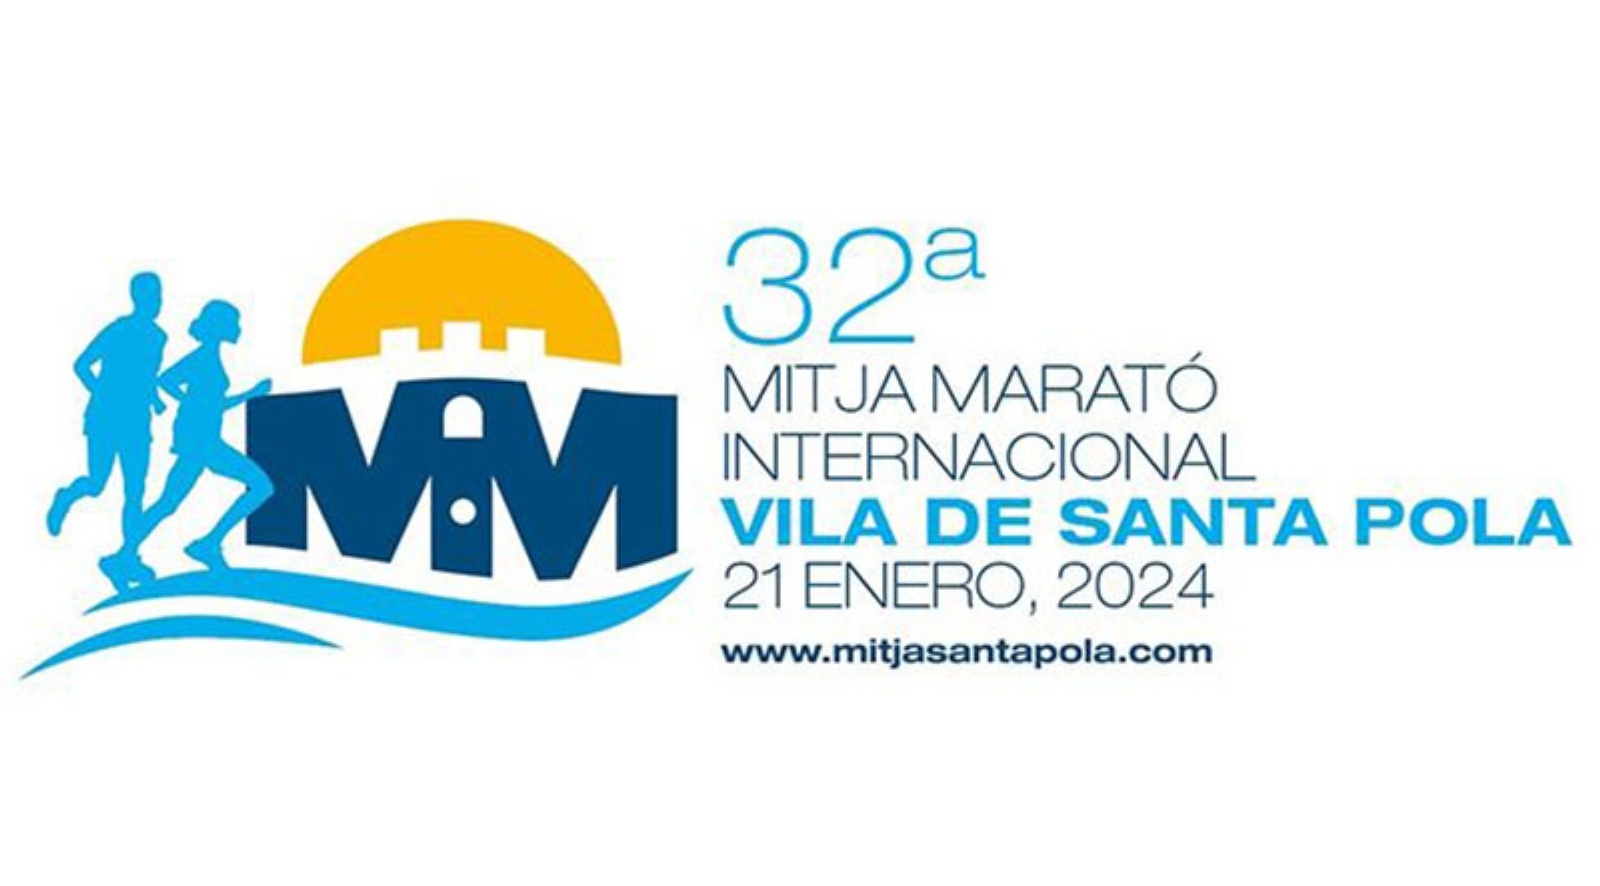 La 32 Mitja Marató Internacional Santa Pola 2024